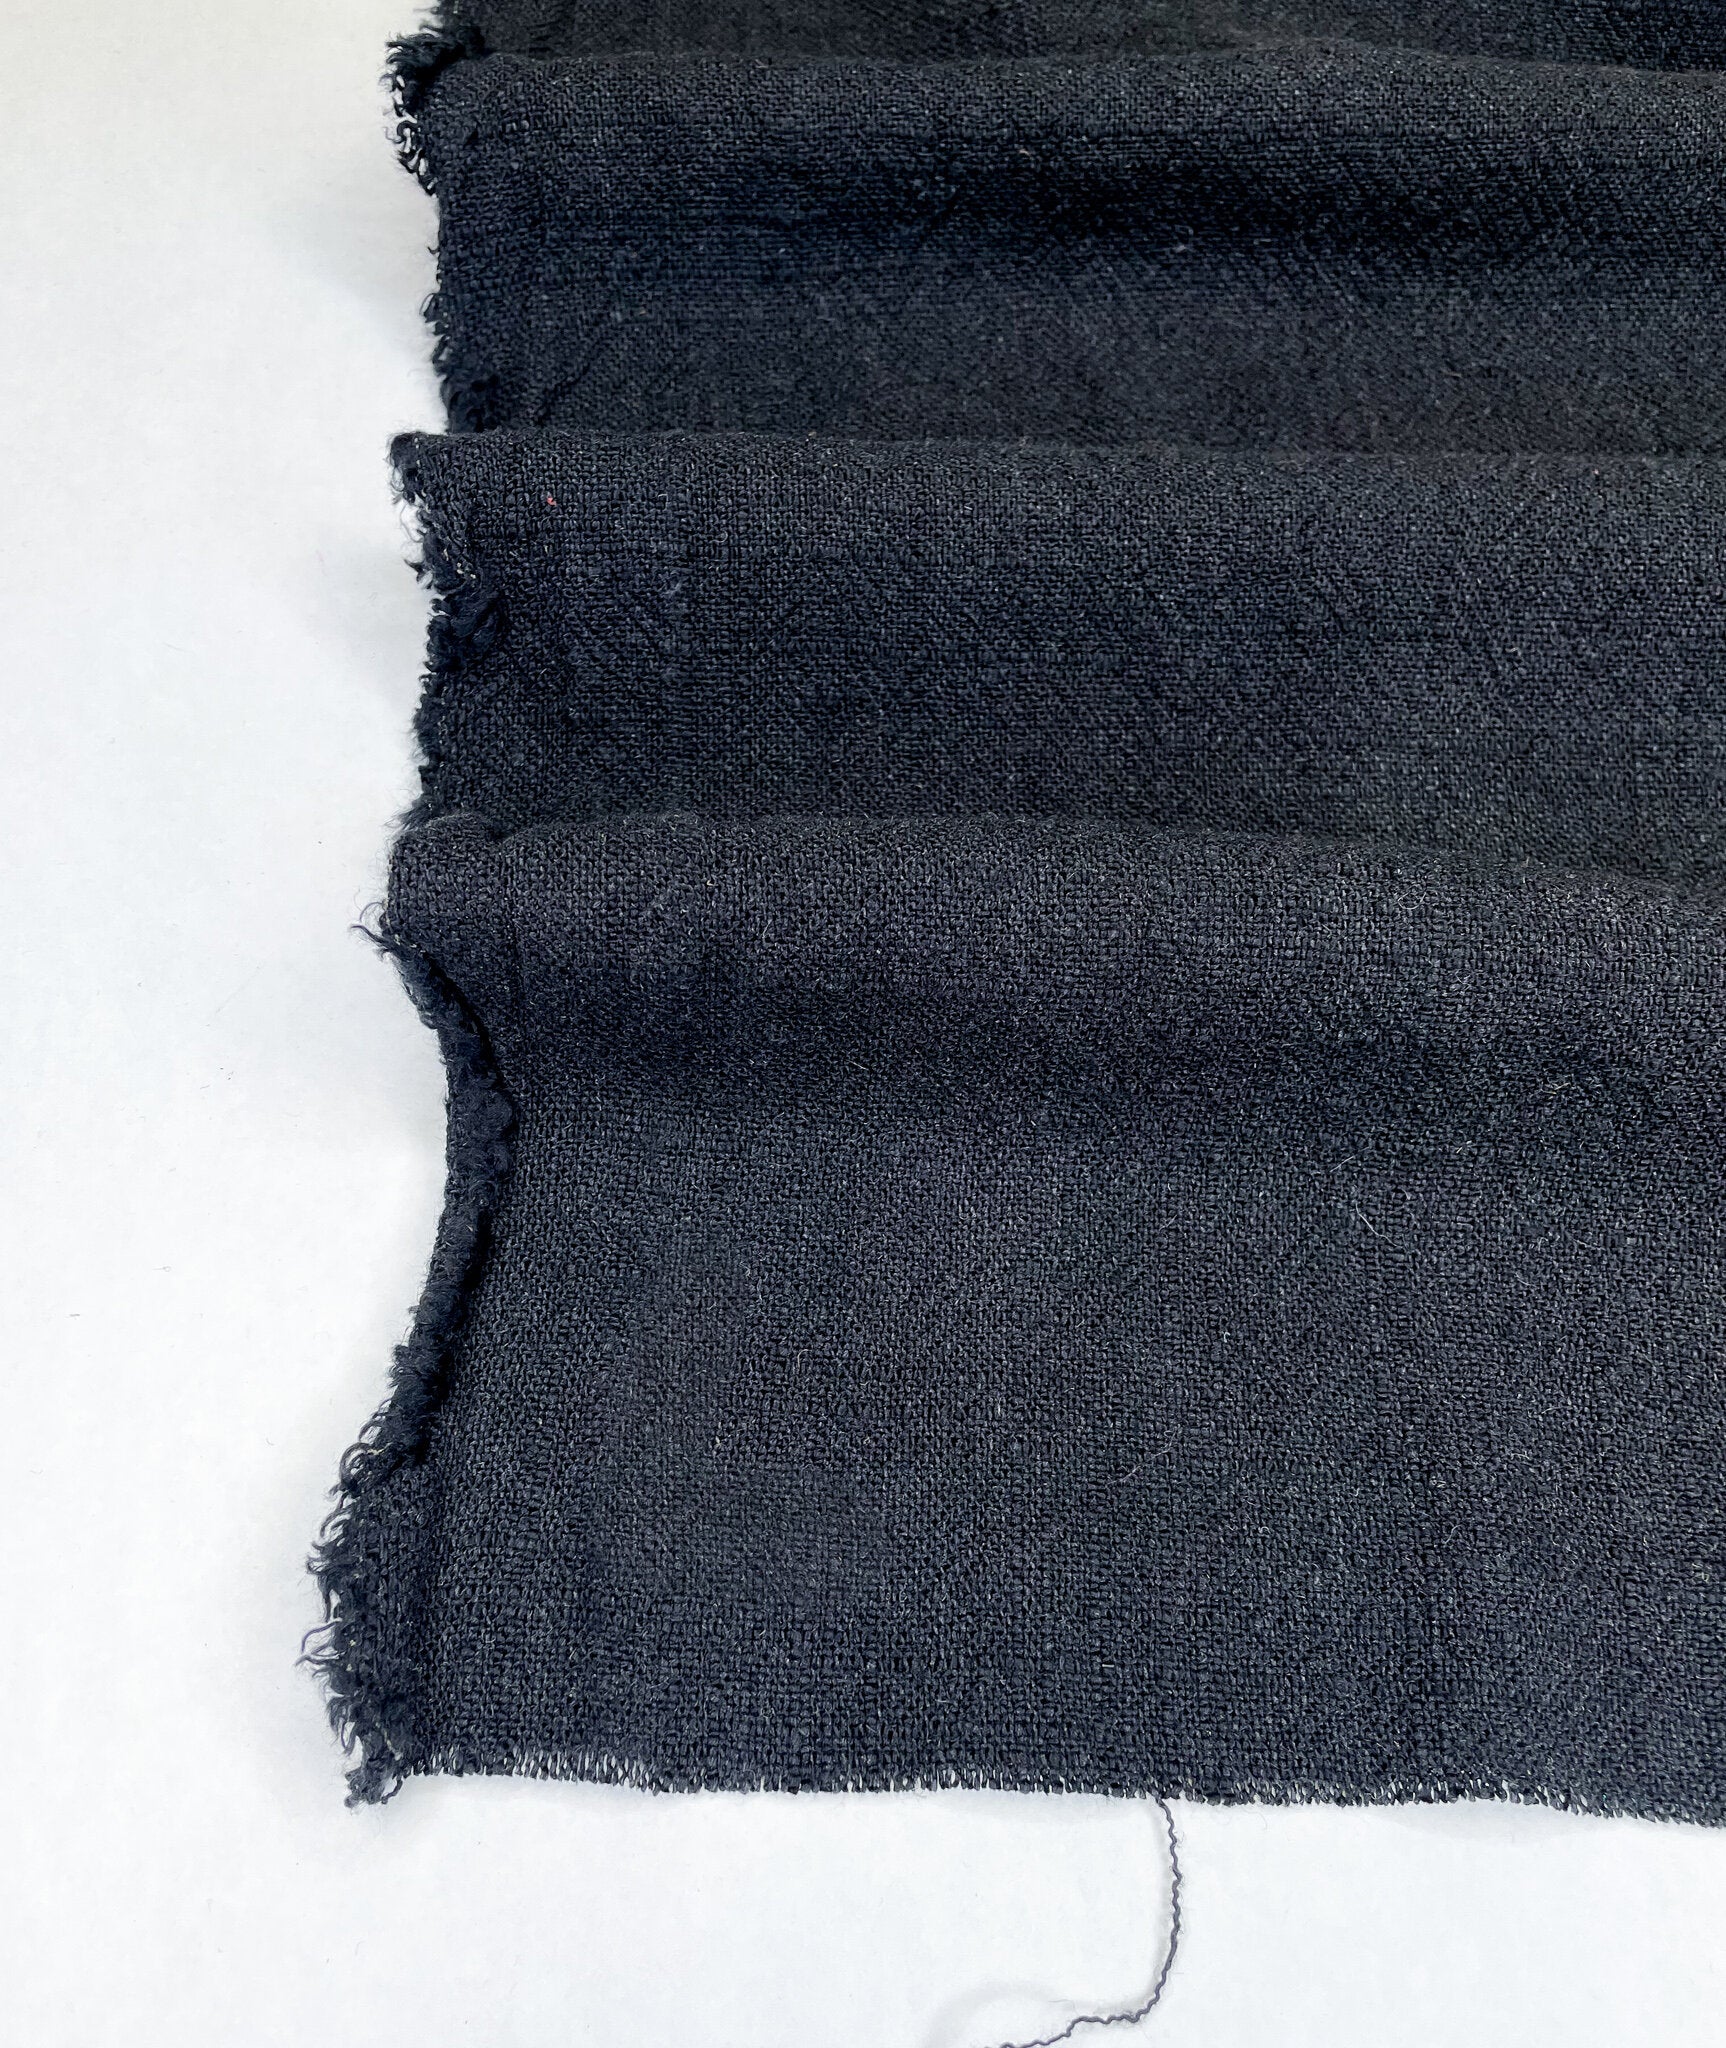 Fabric, Linen Jacquard, Echo Viscose Linen Blend Black